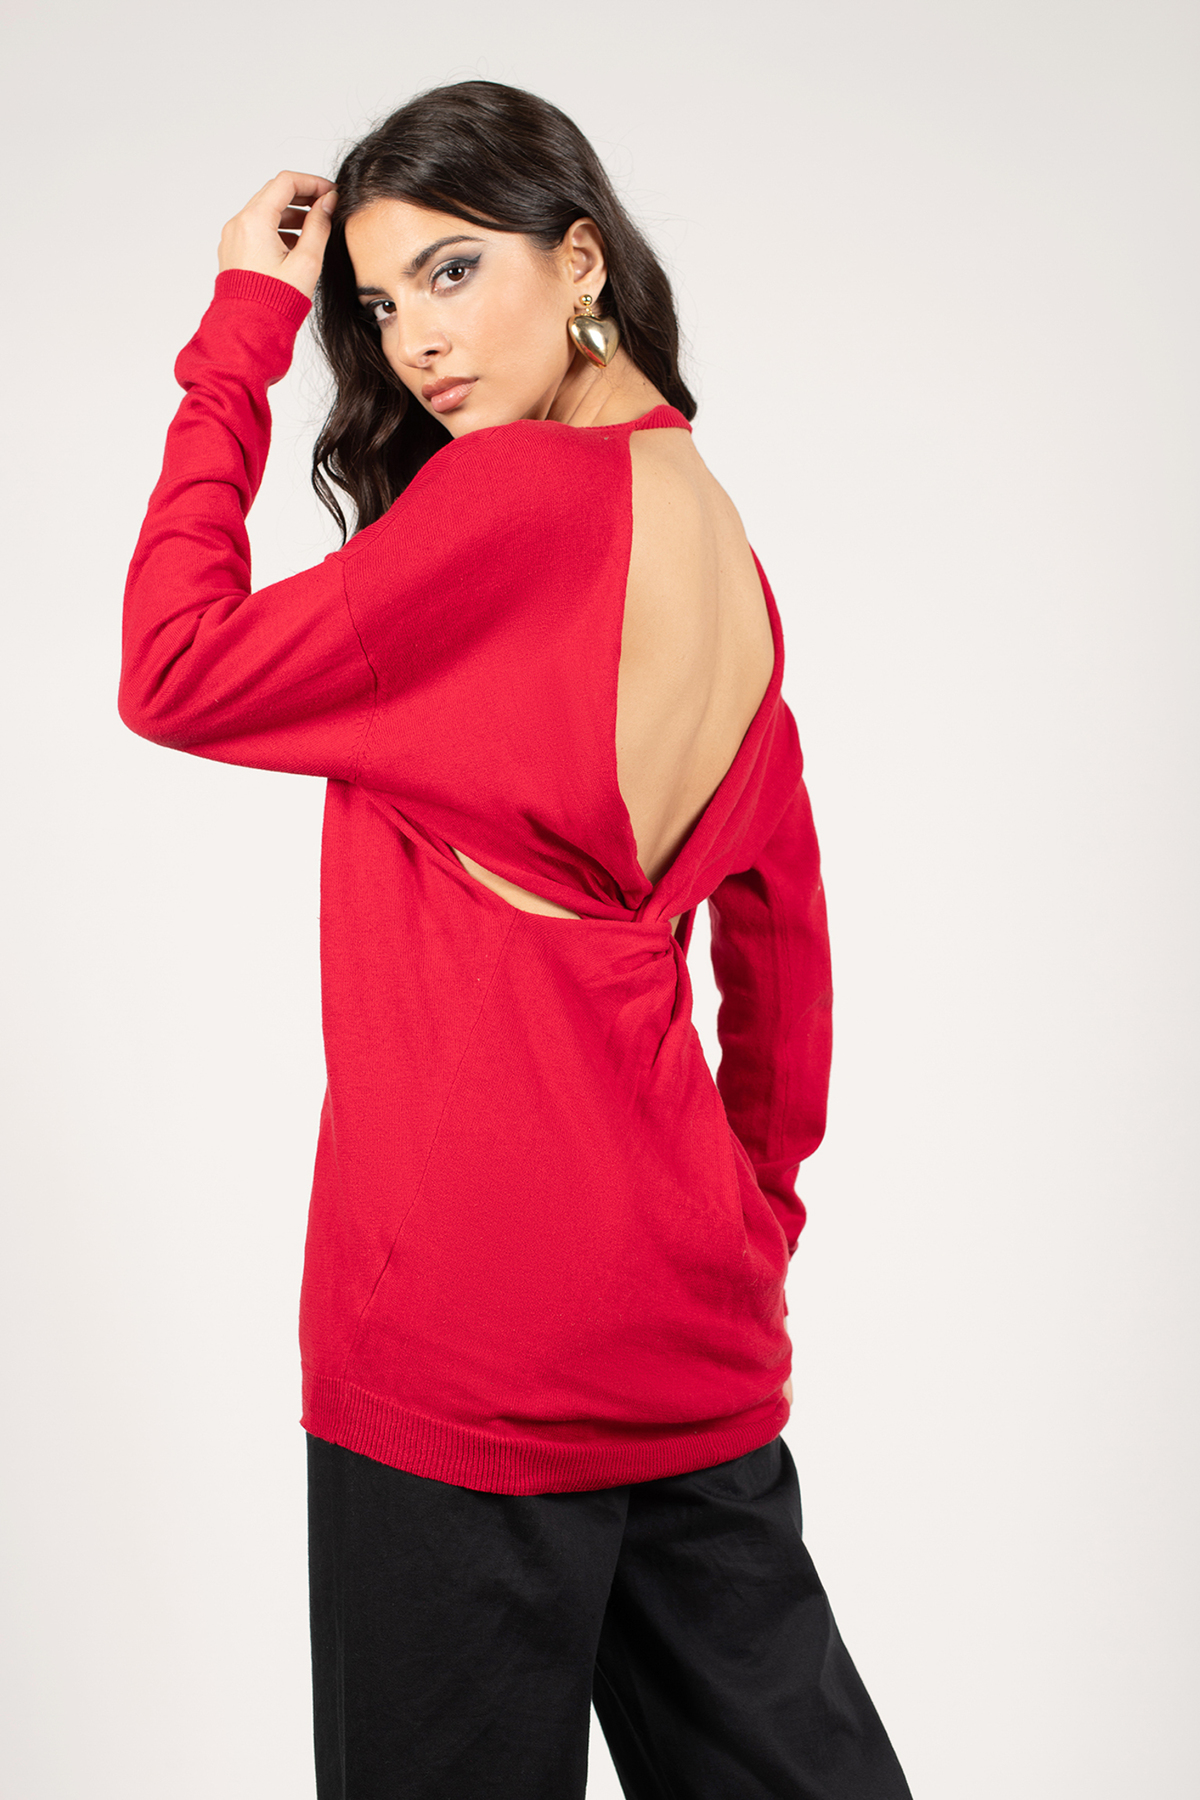 Twist It Sweater in Red - $24 | Tobi US